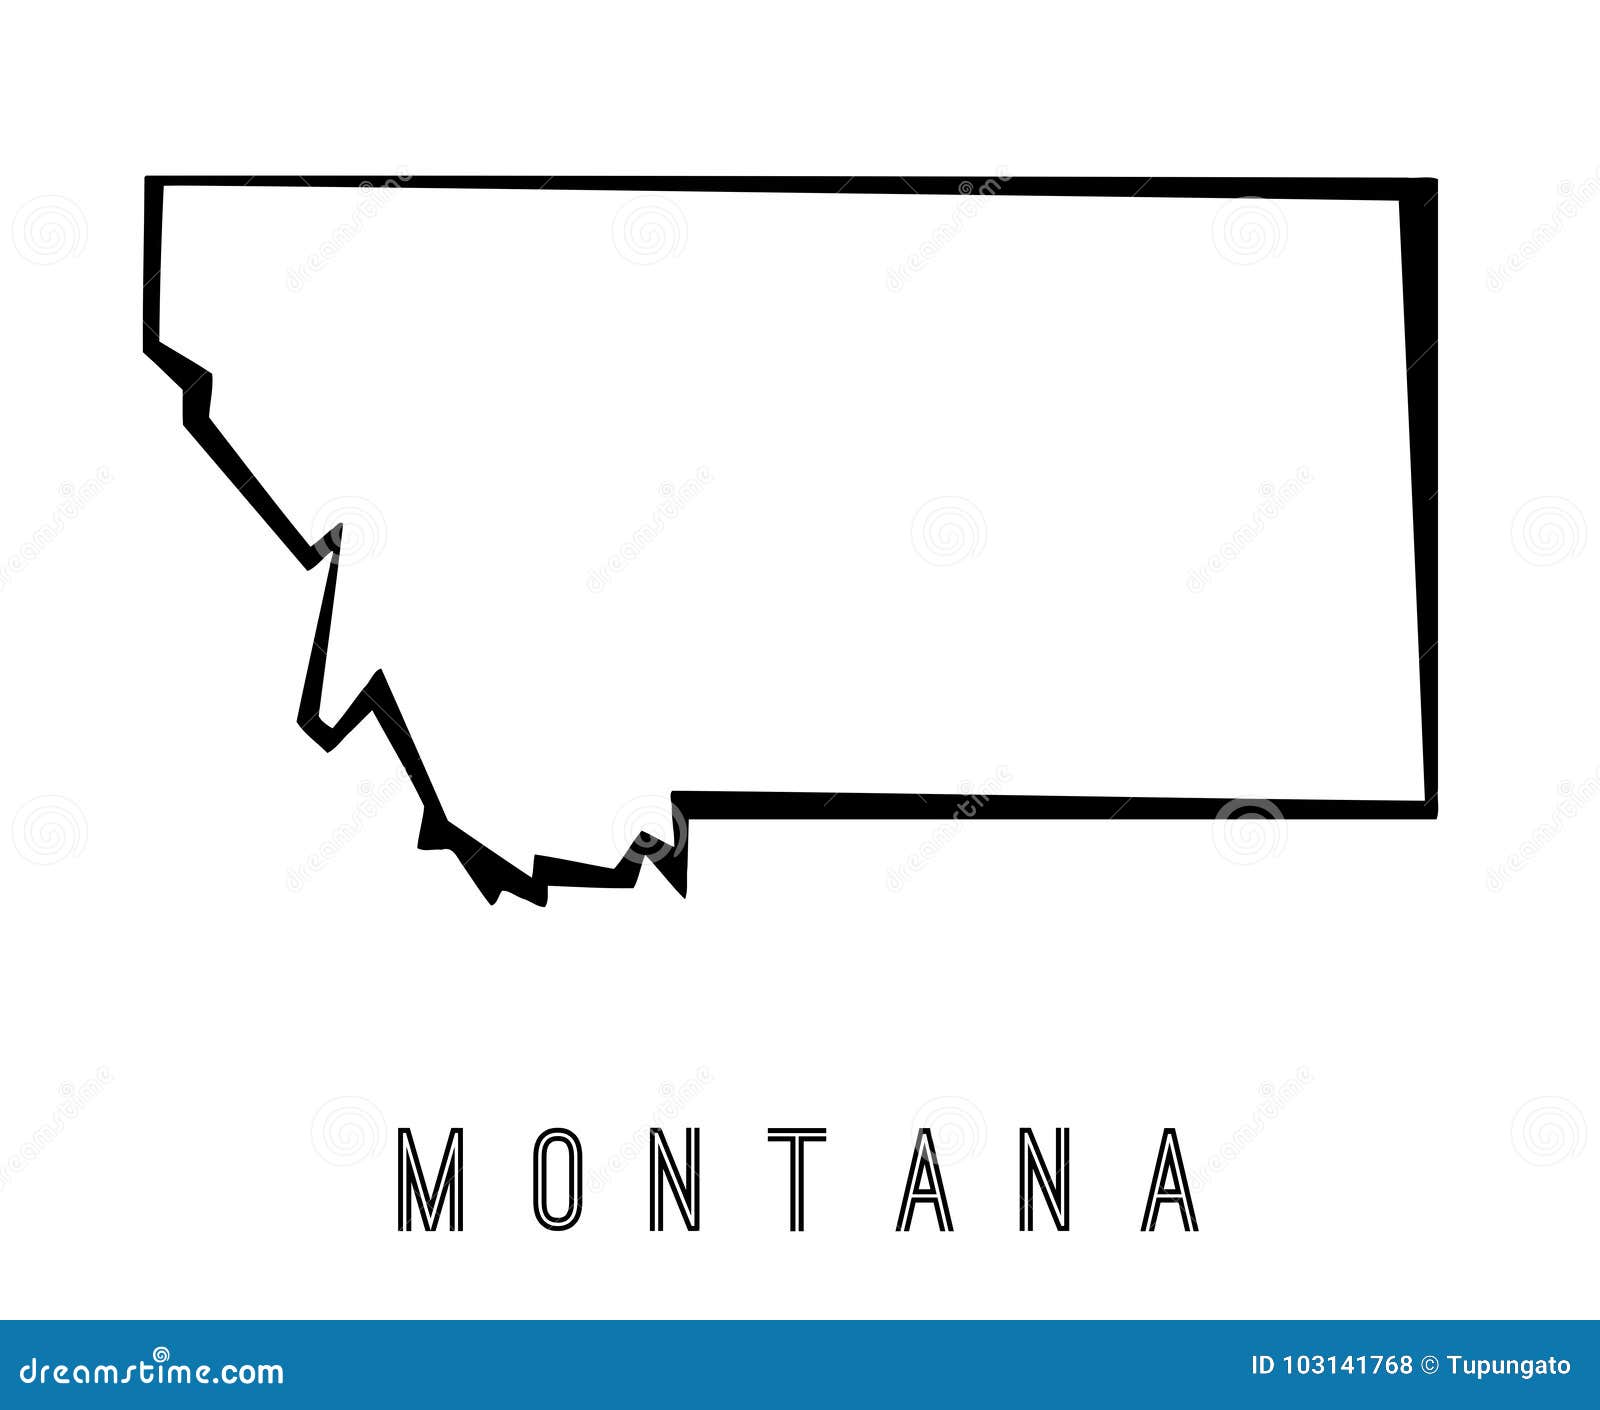 montana geometric map